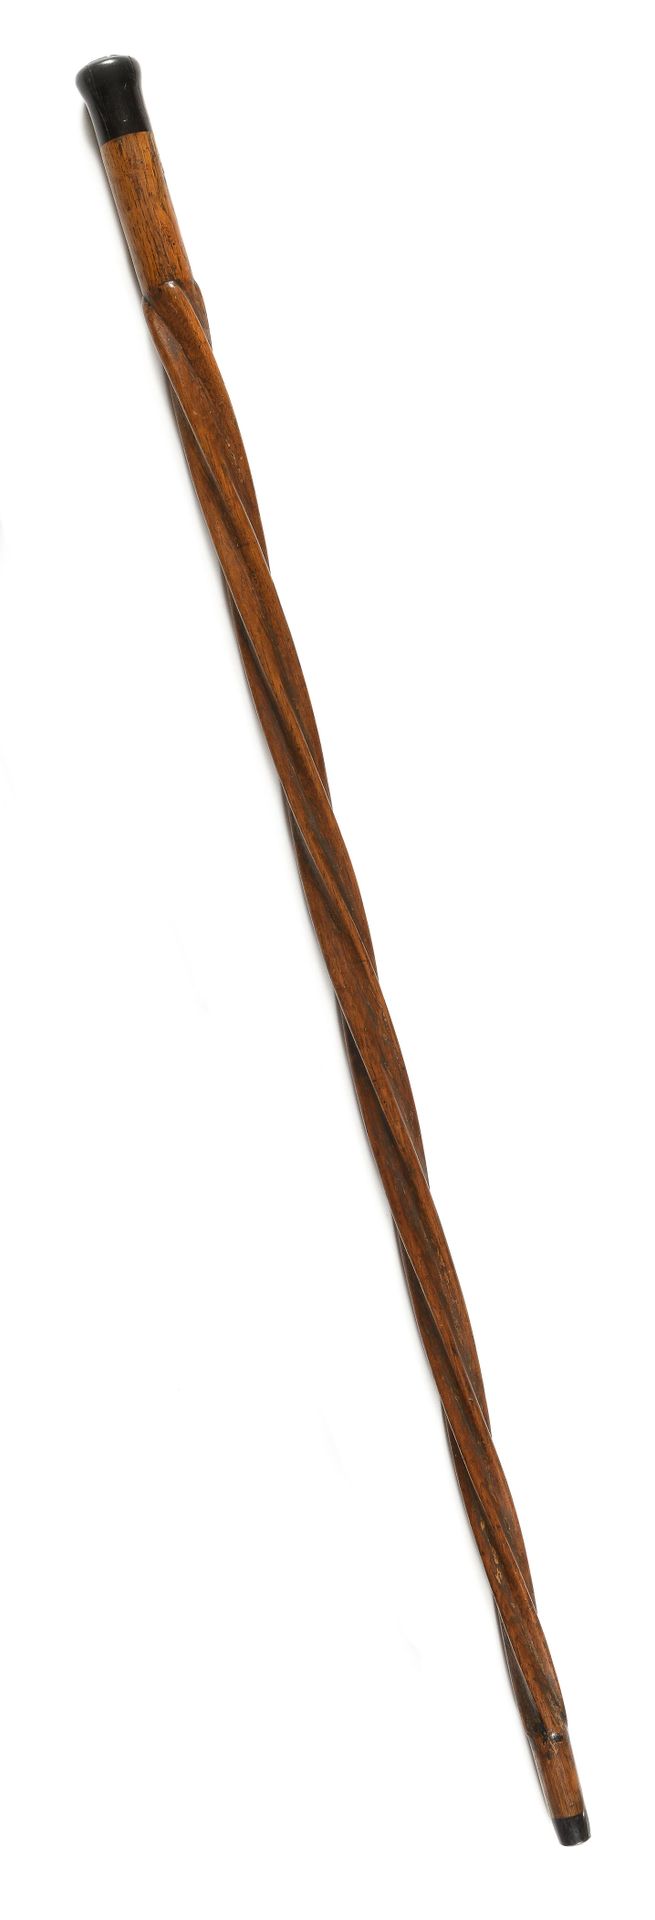 Null *Stiletto dagger stick

Blackened wood pommel

Long blackened wood shaft wi&hellip;